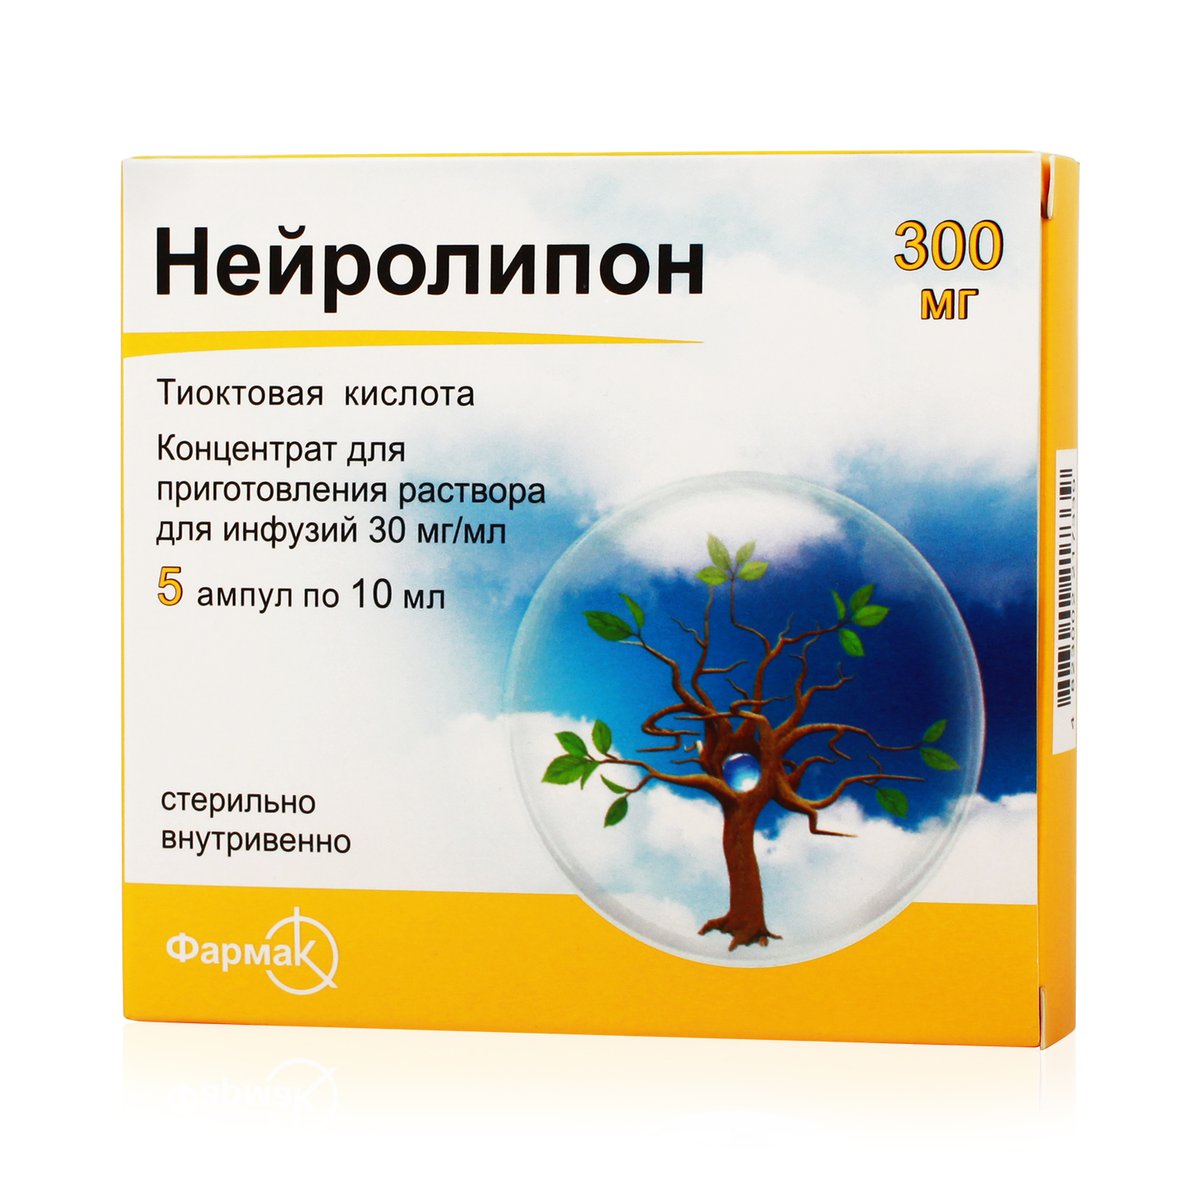 Нейролипон (капсулы, 5 шт, 10 мл, 300 мг) - цена,  онлайн в .